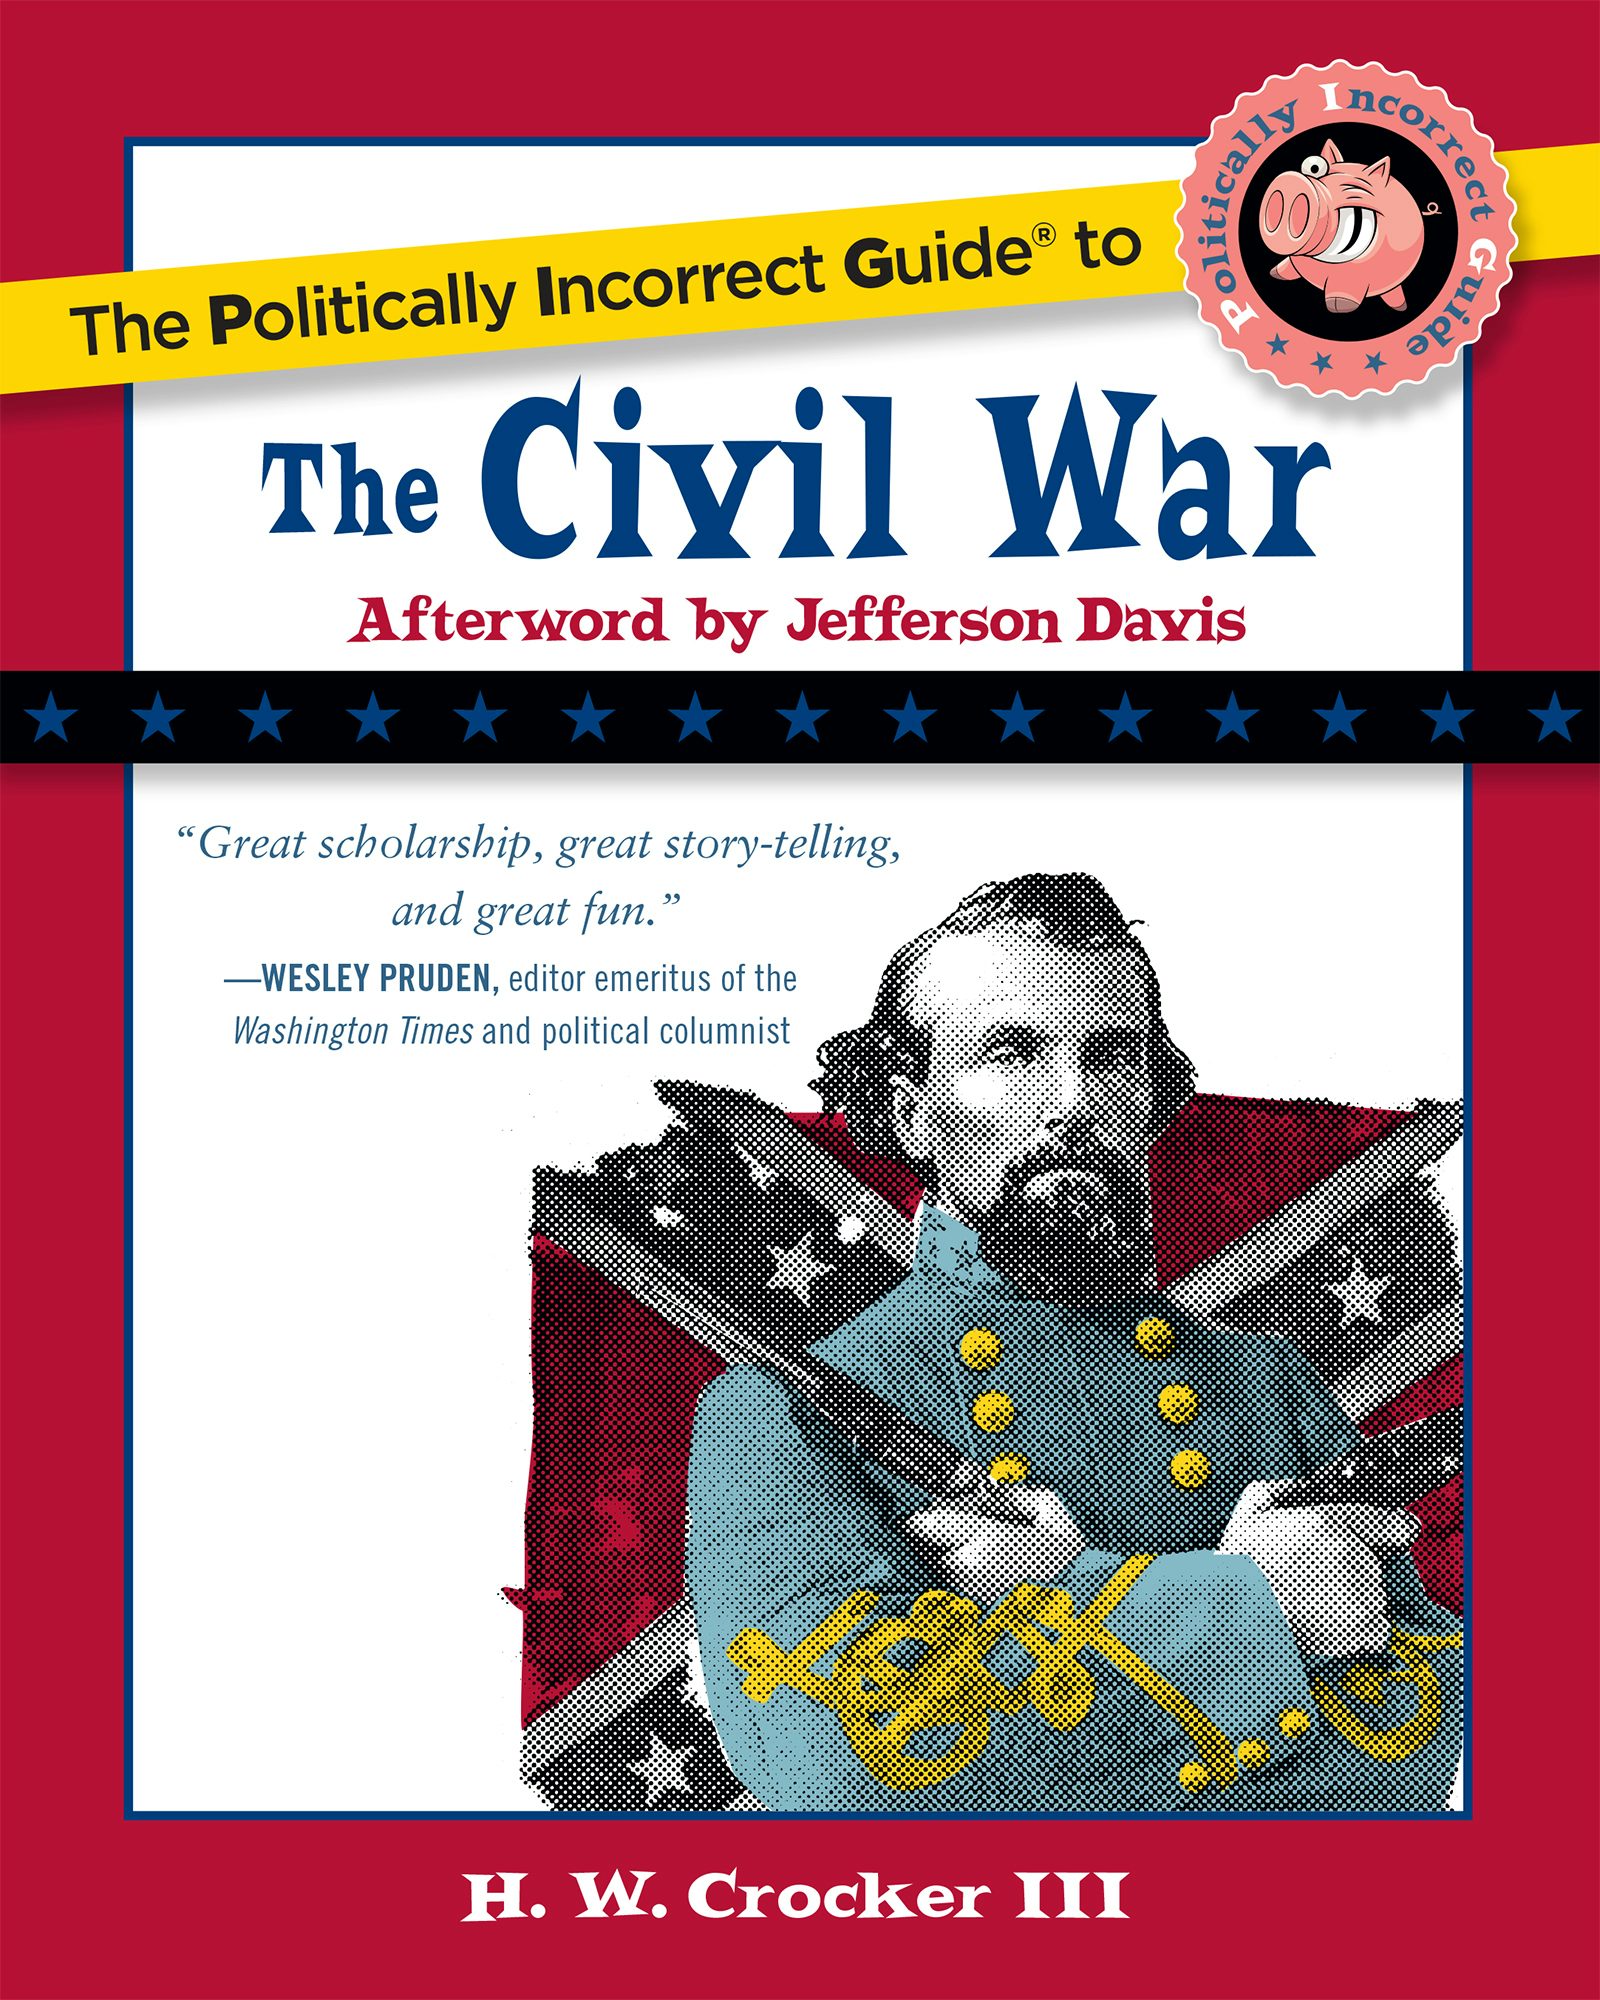 will call of duty go to civil war era